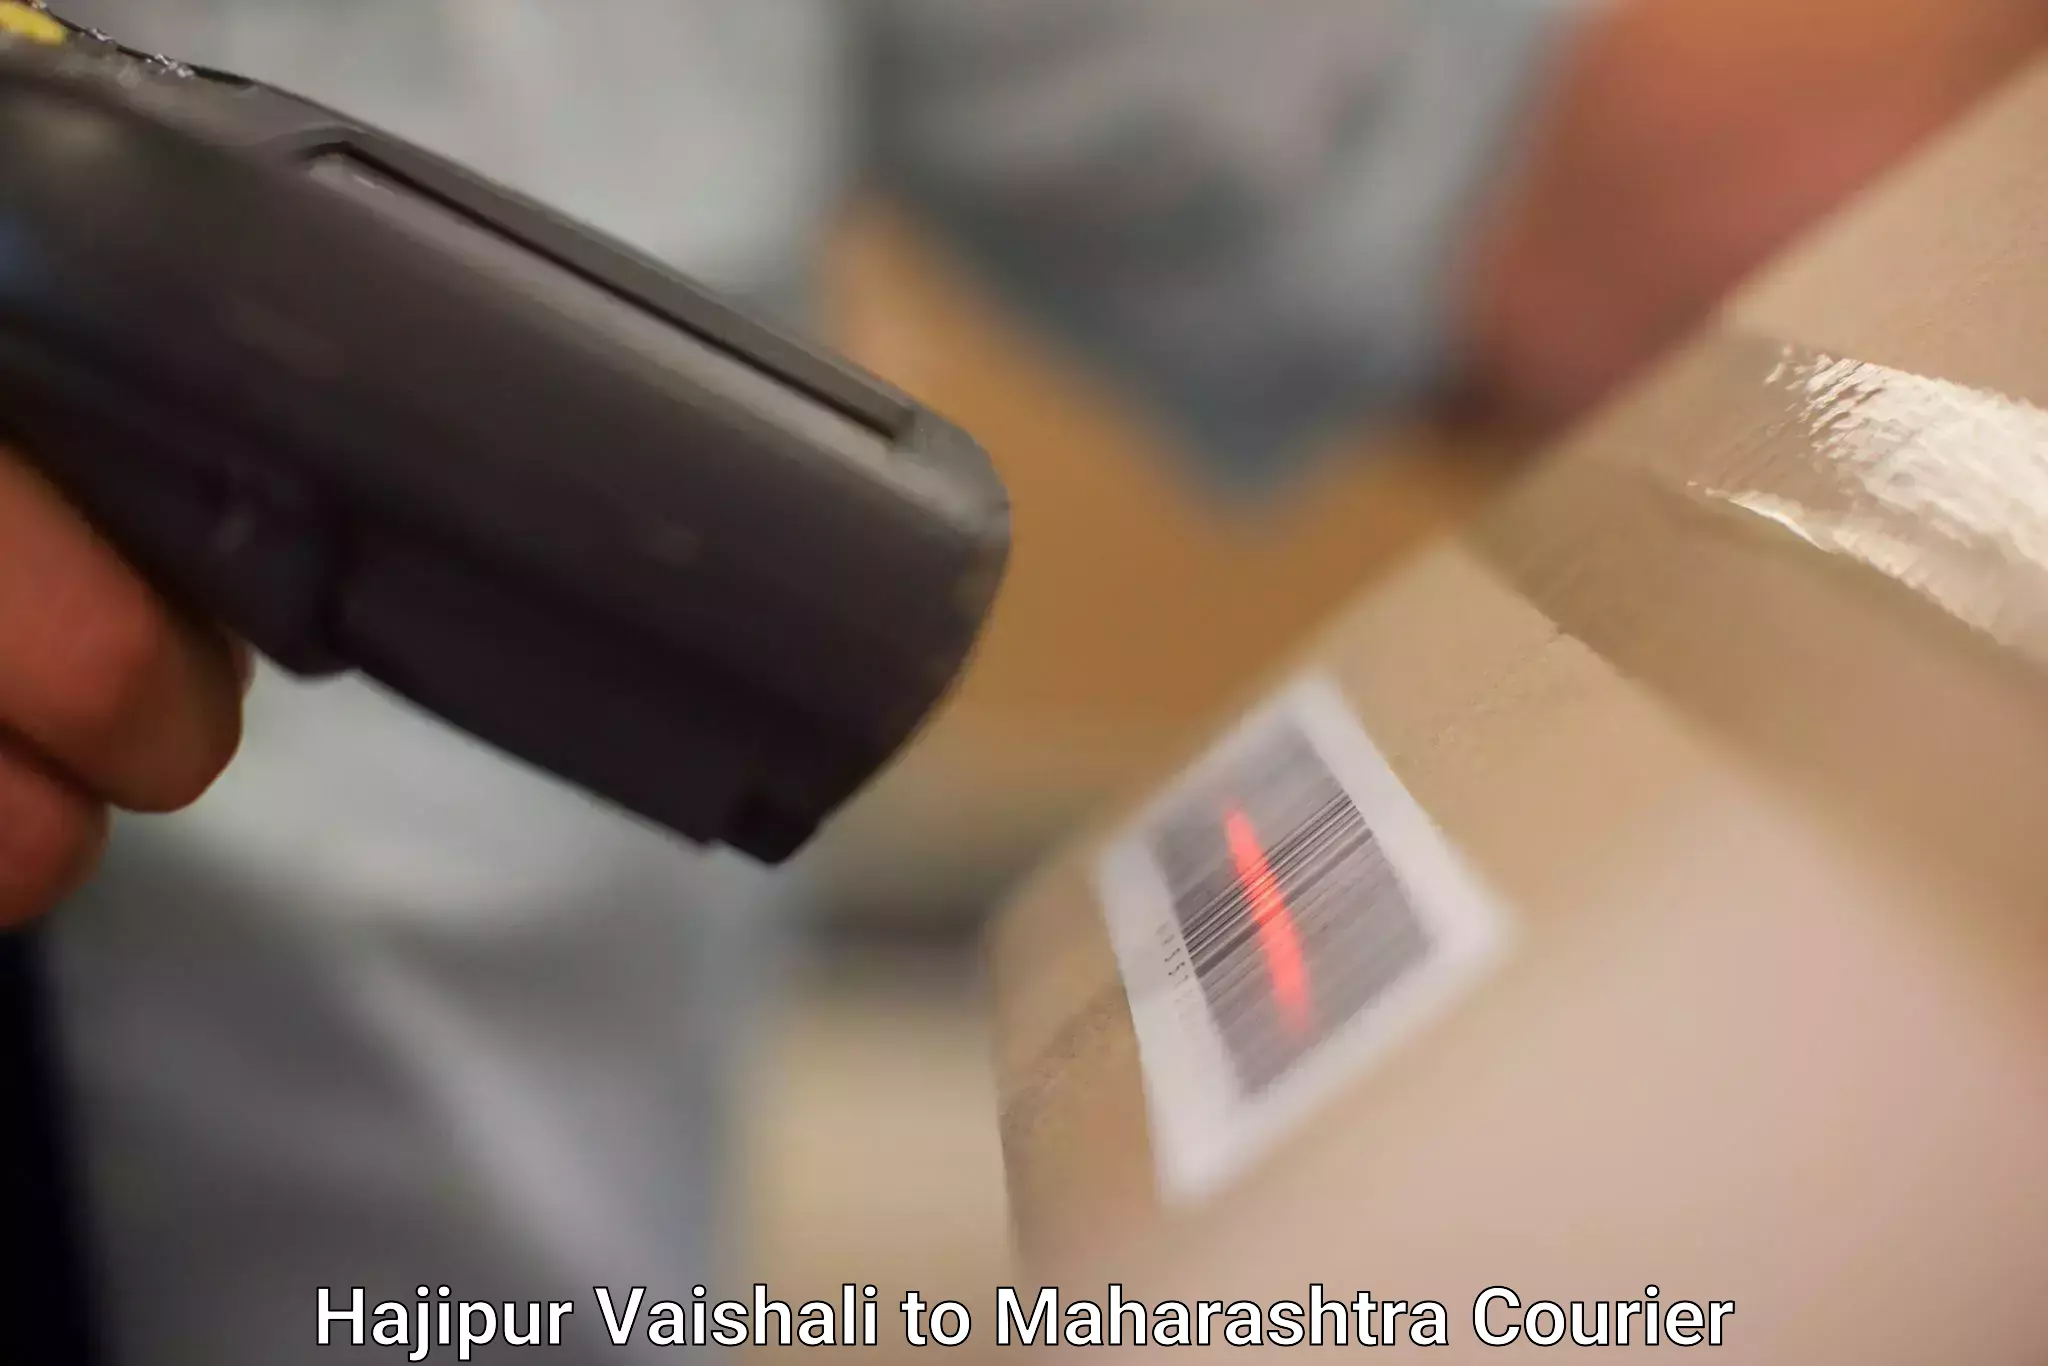 On-demand shipping options Hajipur Vaishali to Khandala Pune